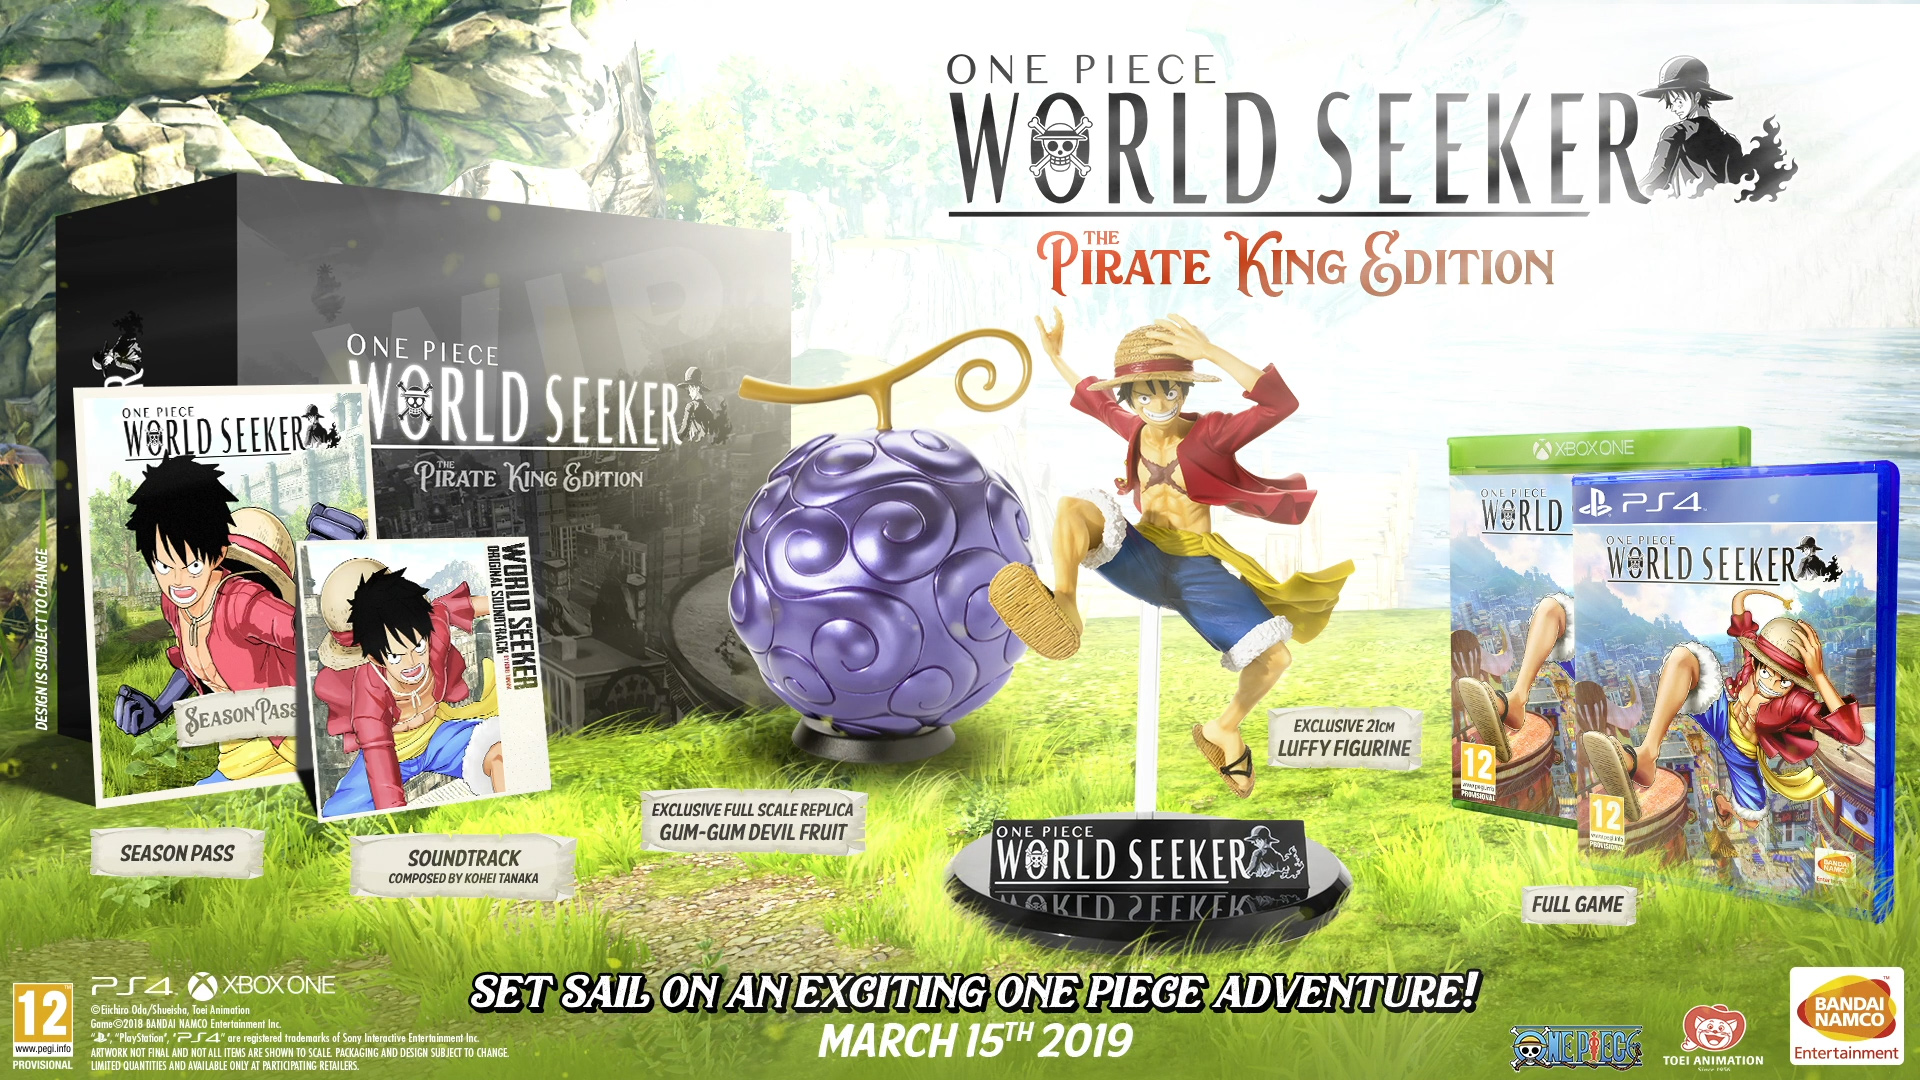 One-Piece-World-Seeker-The-Pirate-King-Edition-EN.jpg